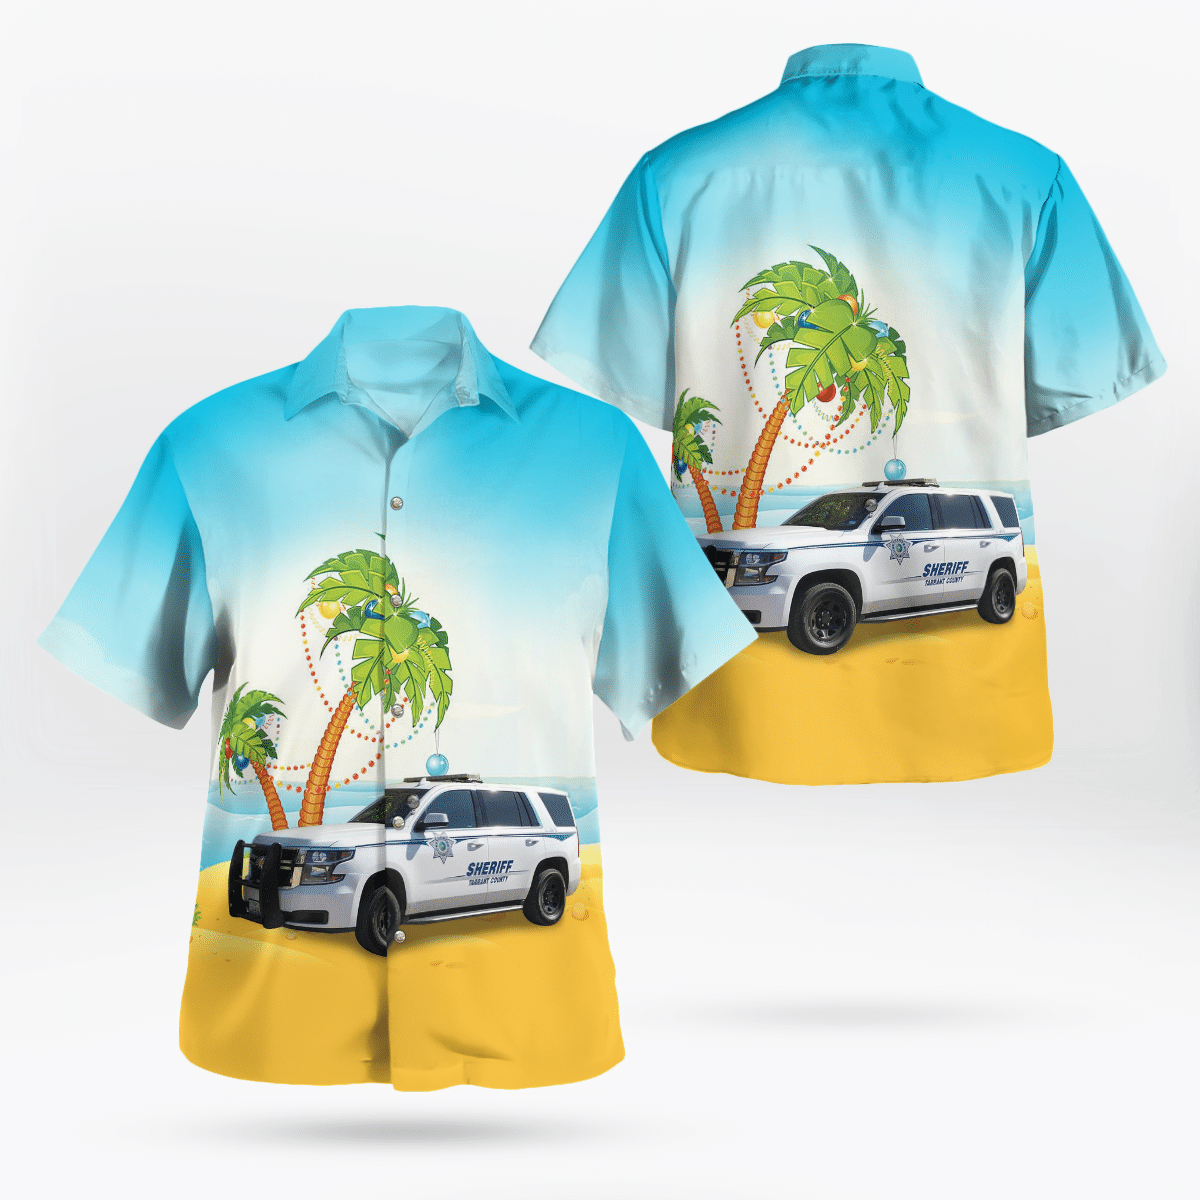 Why don't you order Hot Hawaiian Shirt today? 133